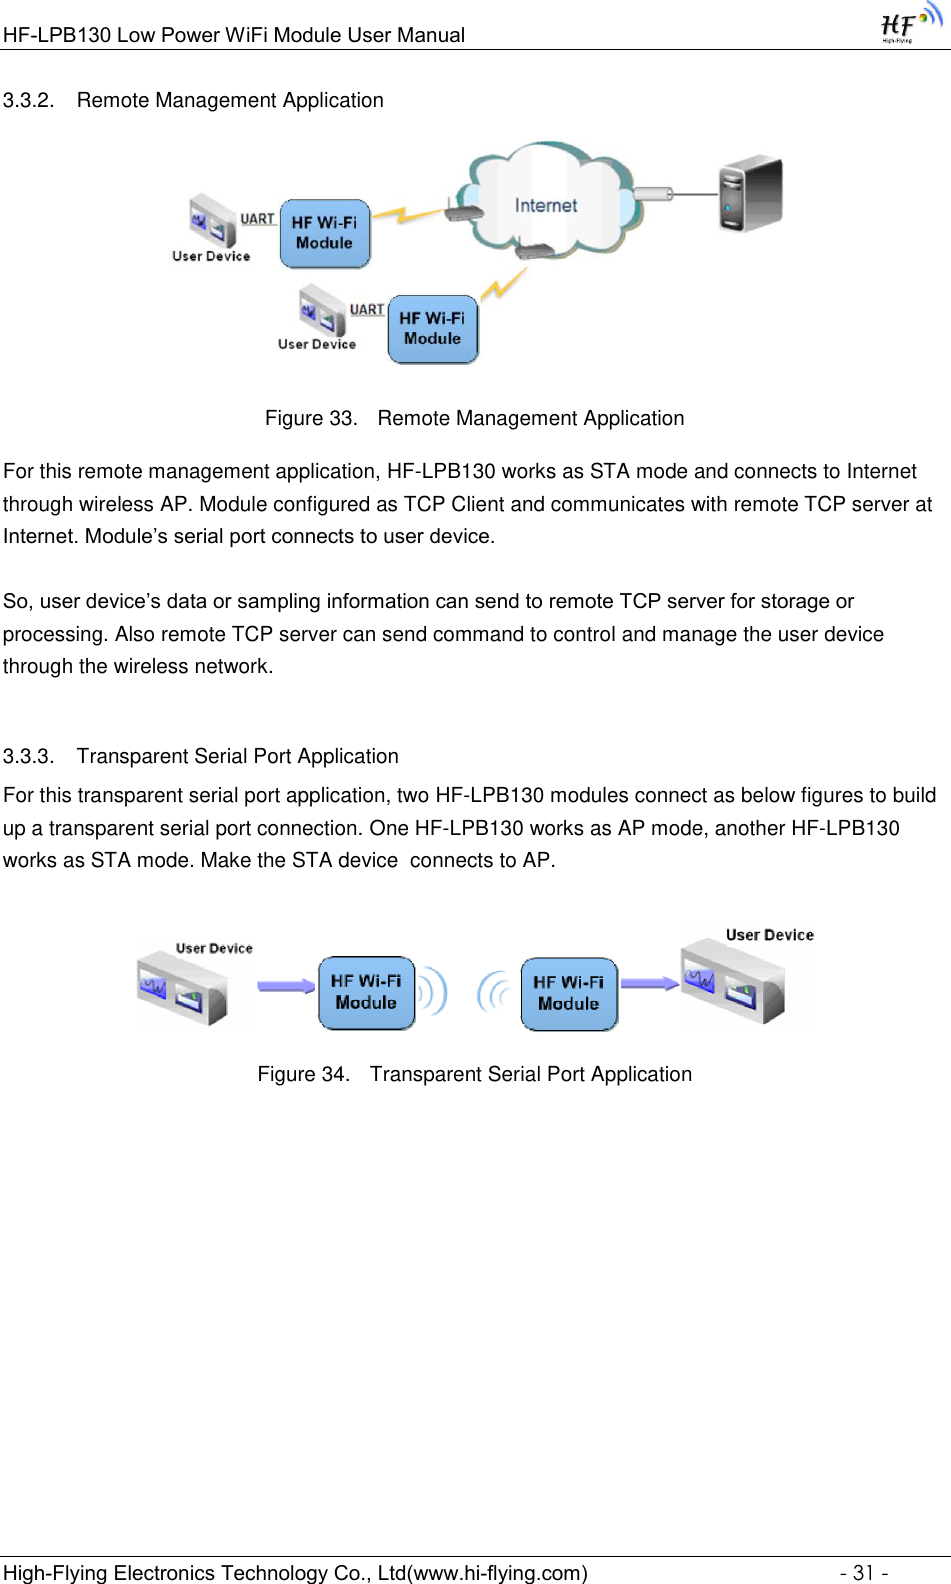 Page 31 of High Flying Electronics Technology HF-LPB130 Wi-Fi Module User Manual GPON SFU System Design